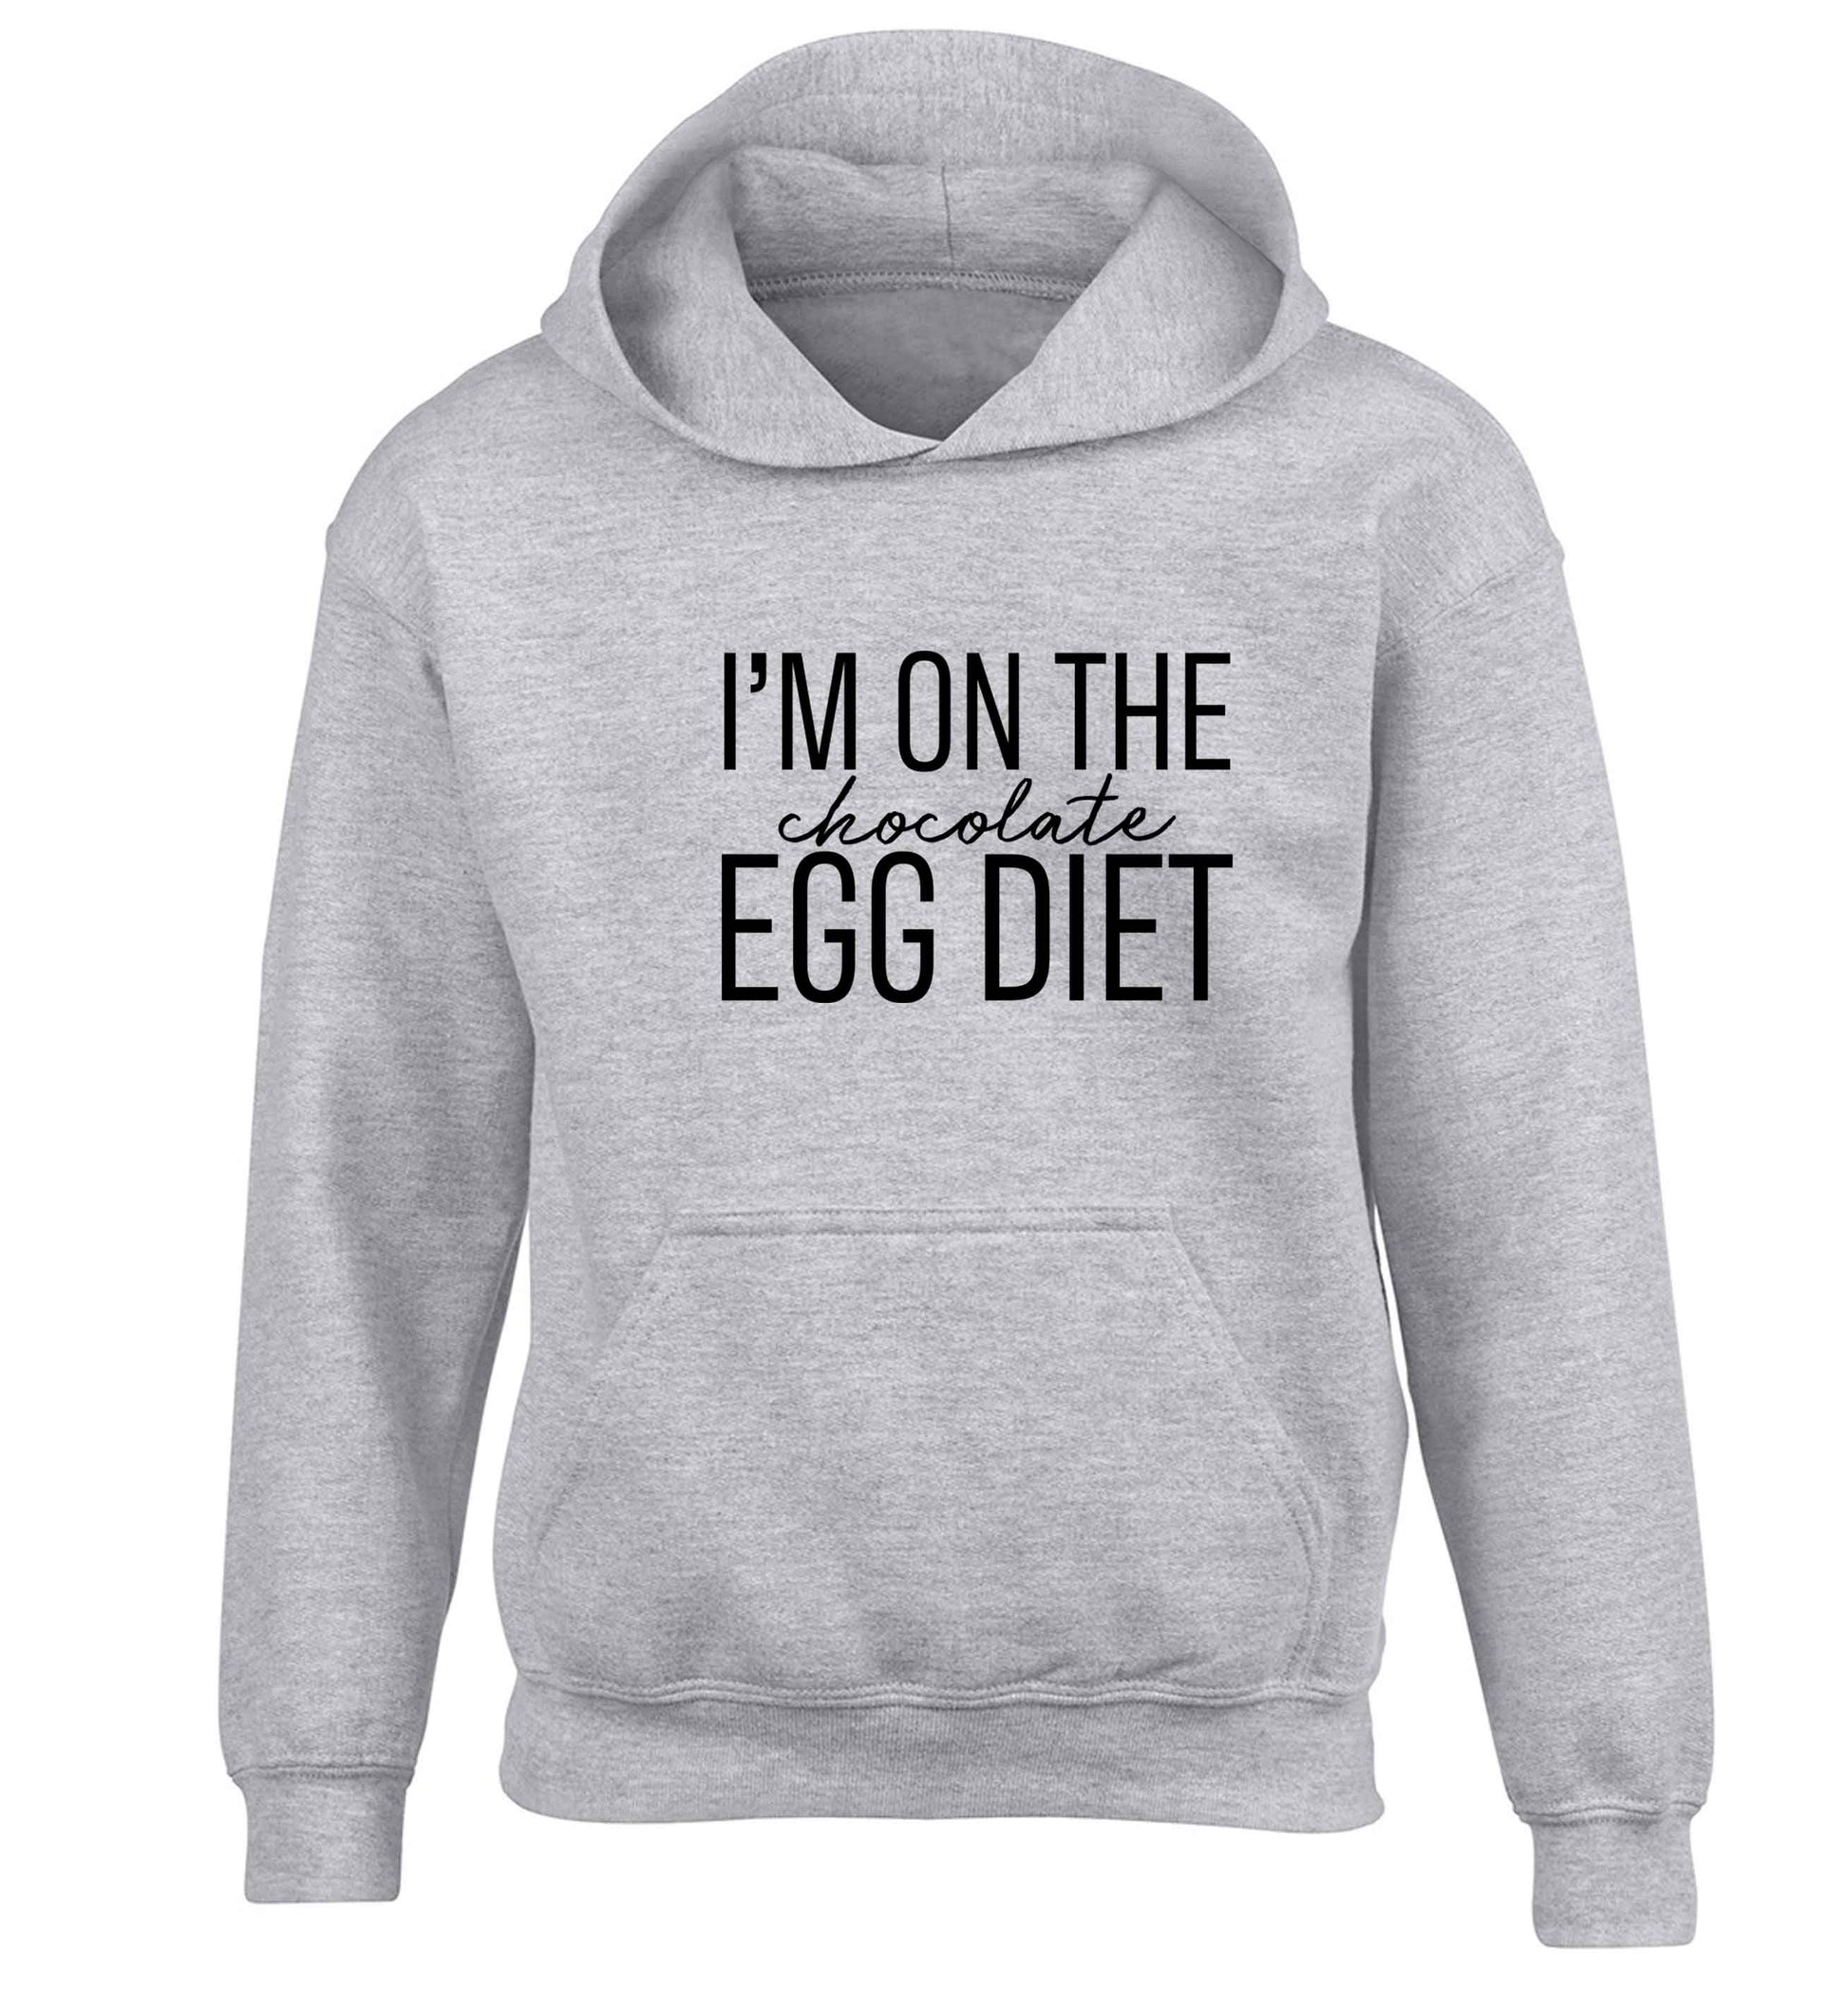 I'm on the chocolate egg diet children's grey hoodie 12-13 Years